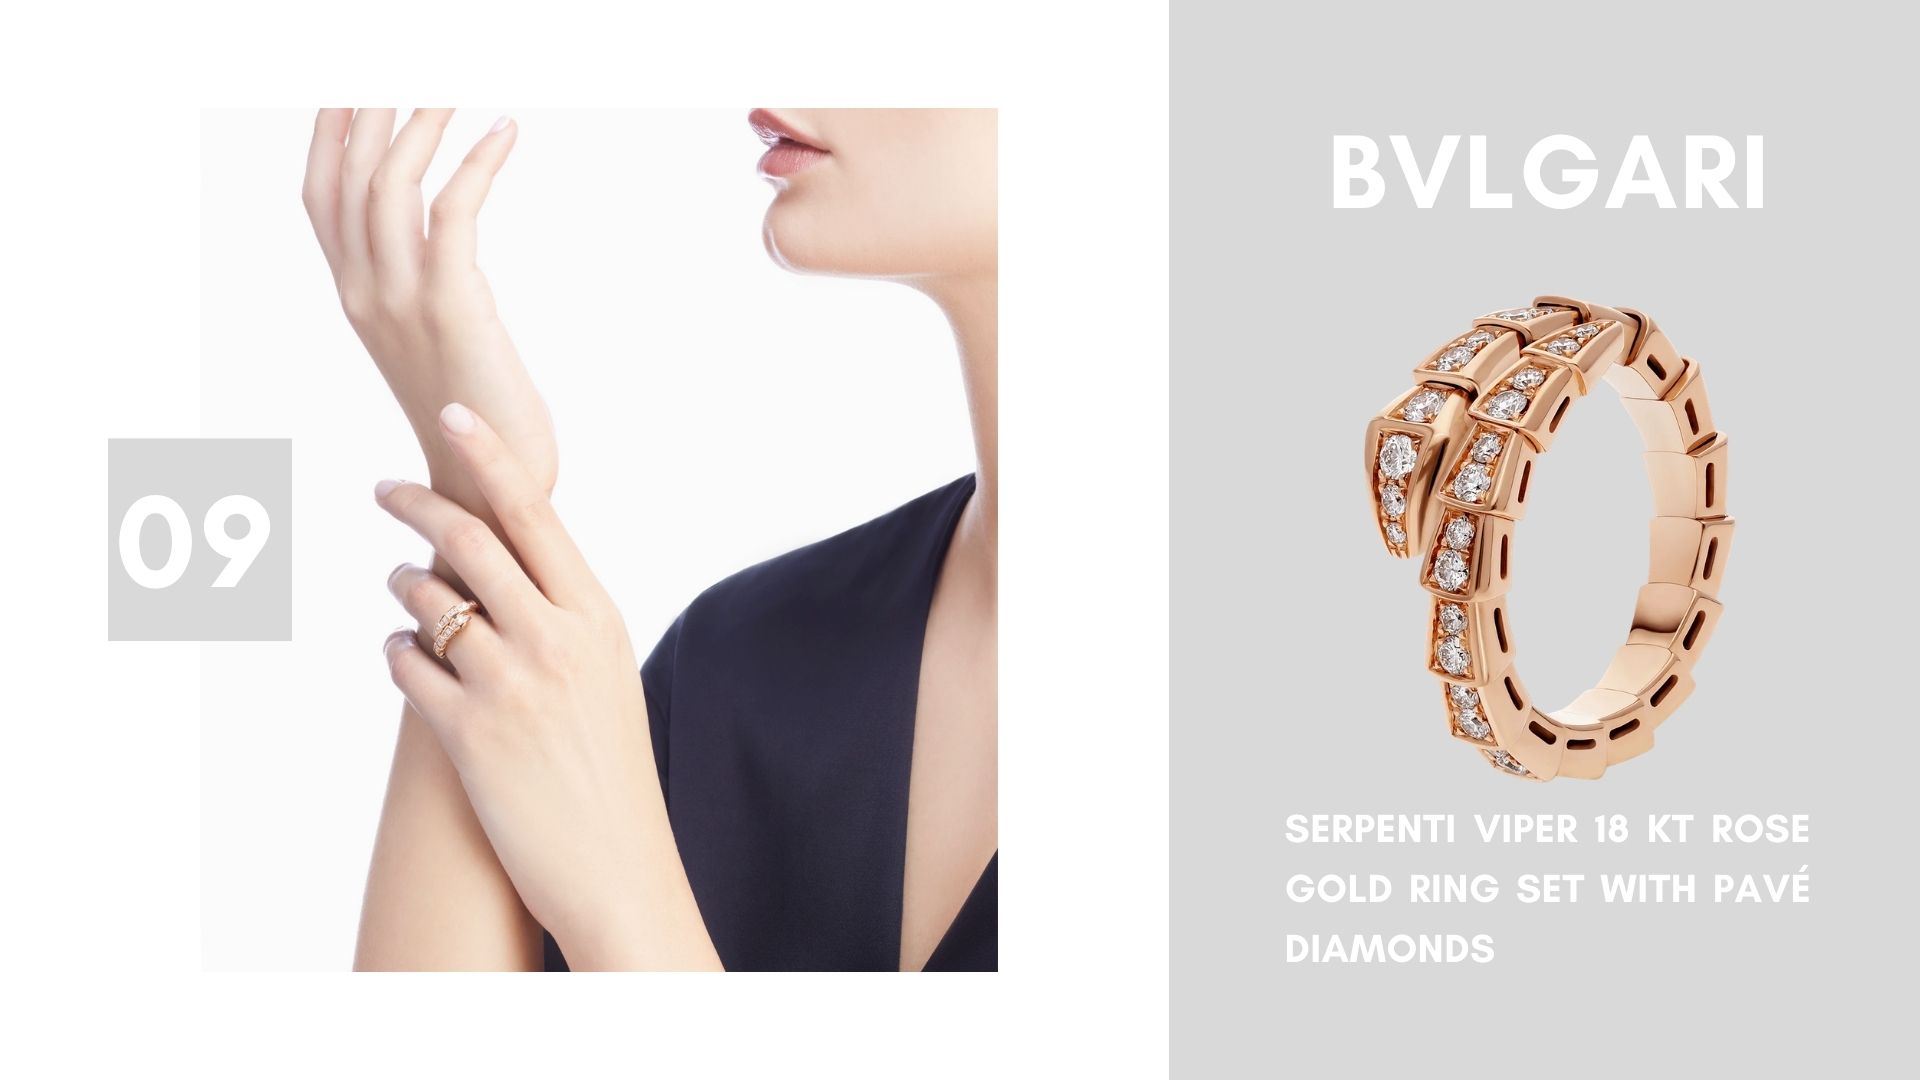 Serpenti Viper 18 kt rose gold ring set with pavé diamonds